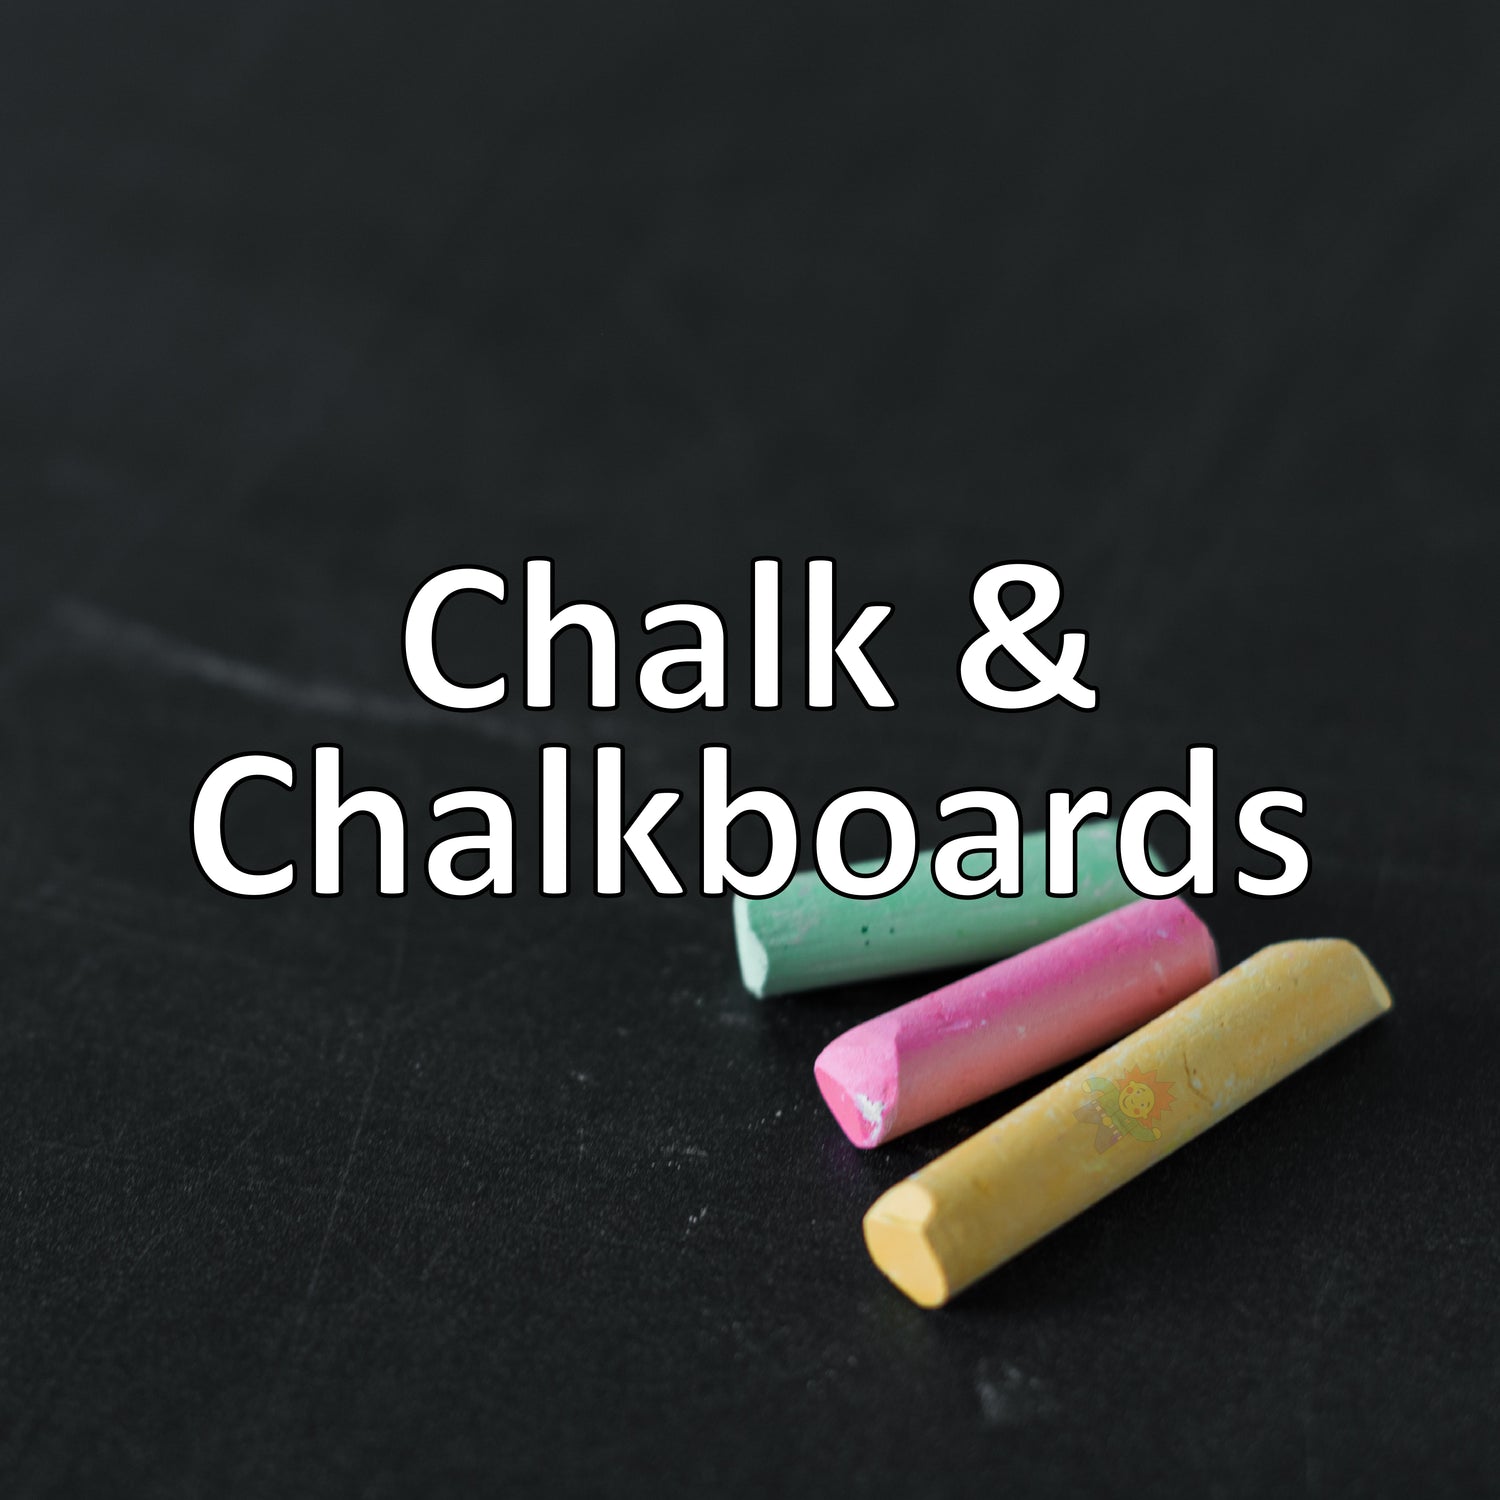 Chalk and Chalkboard